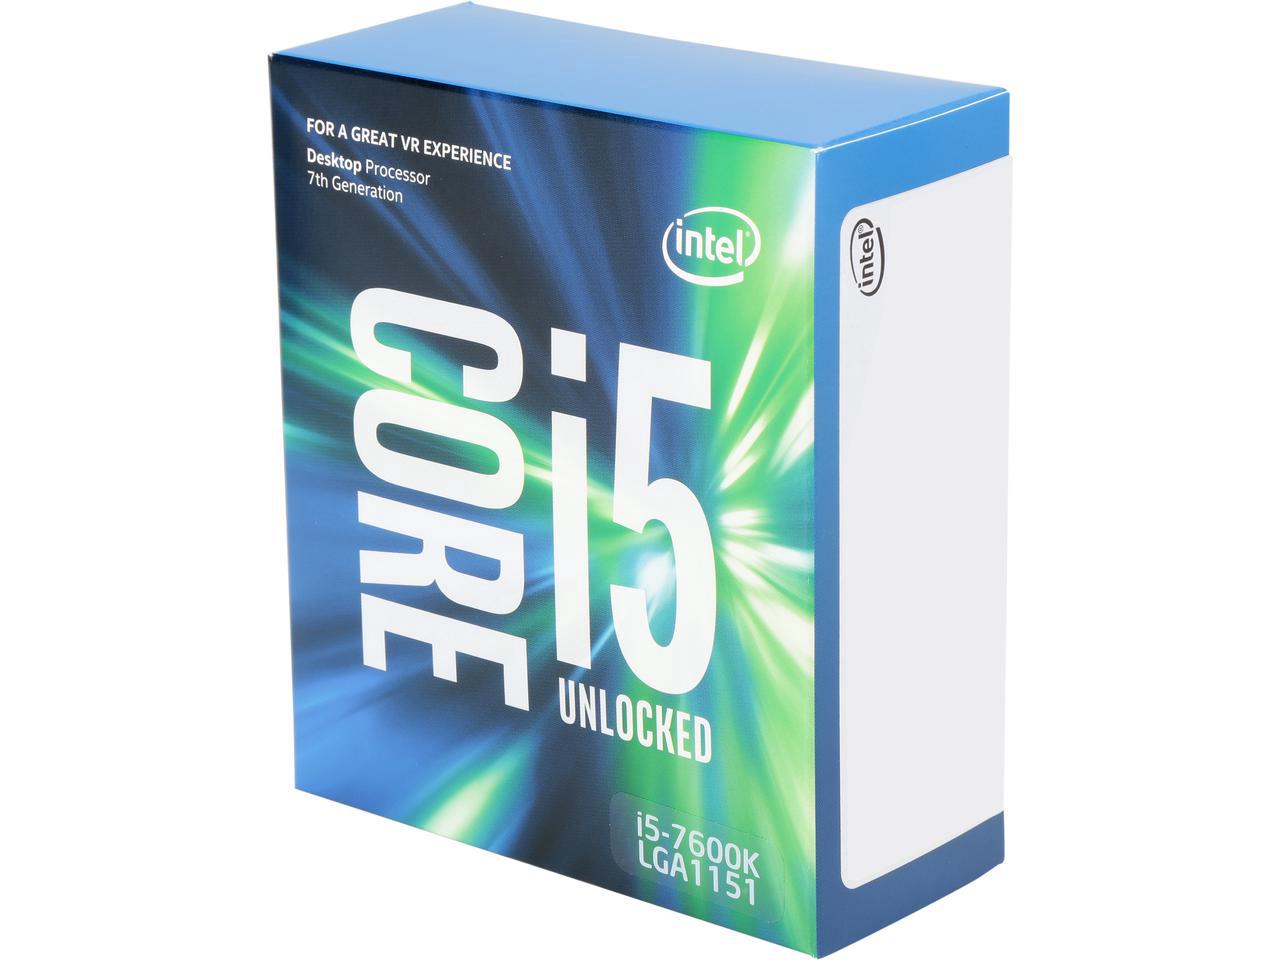 Intel Core i5 7600K Processor 6M Cache up to 4.20 GHz BX80677157600K